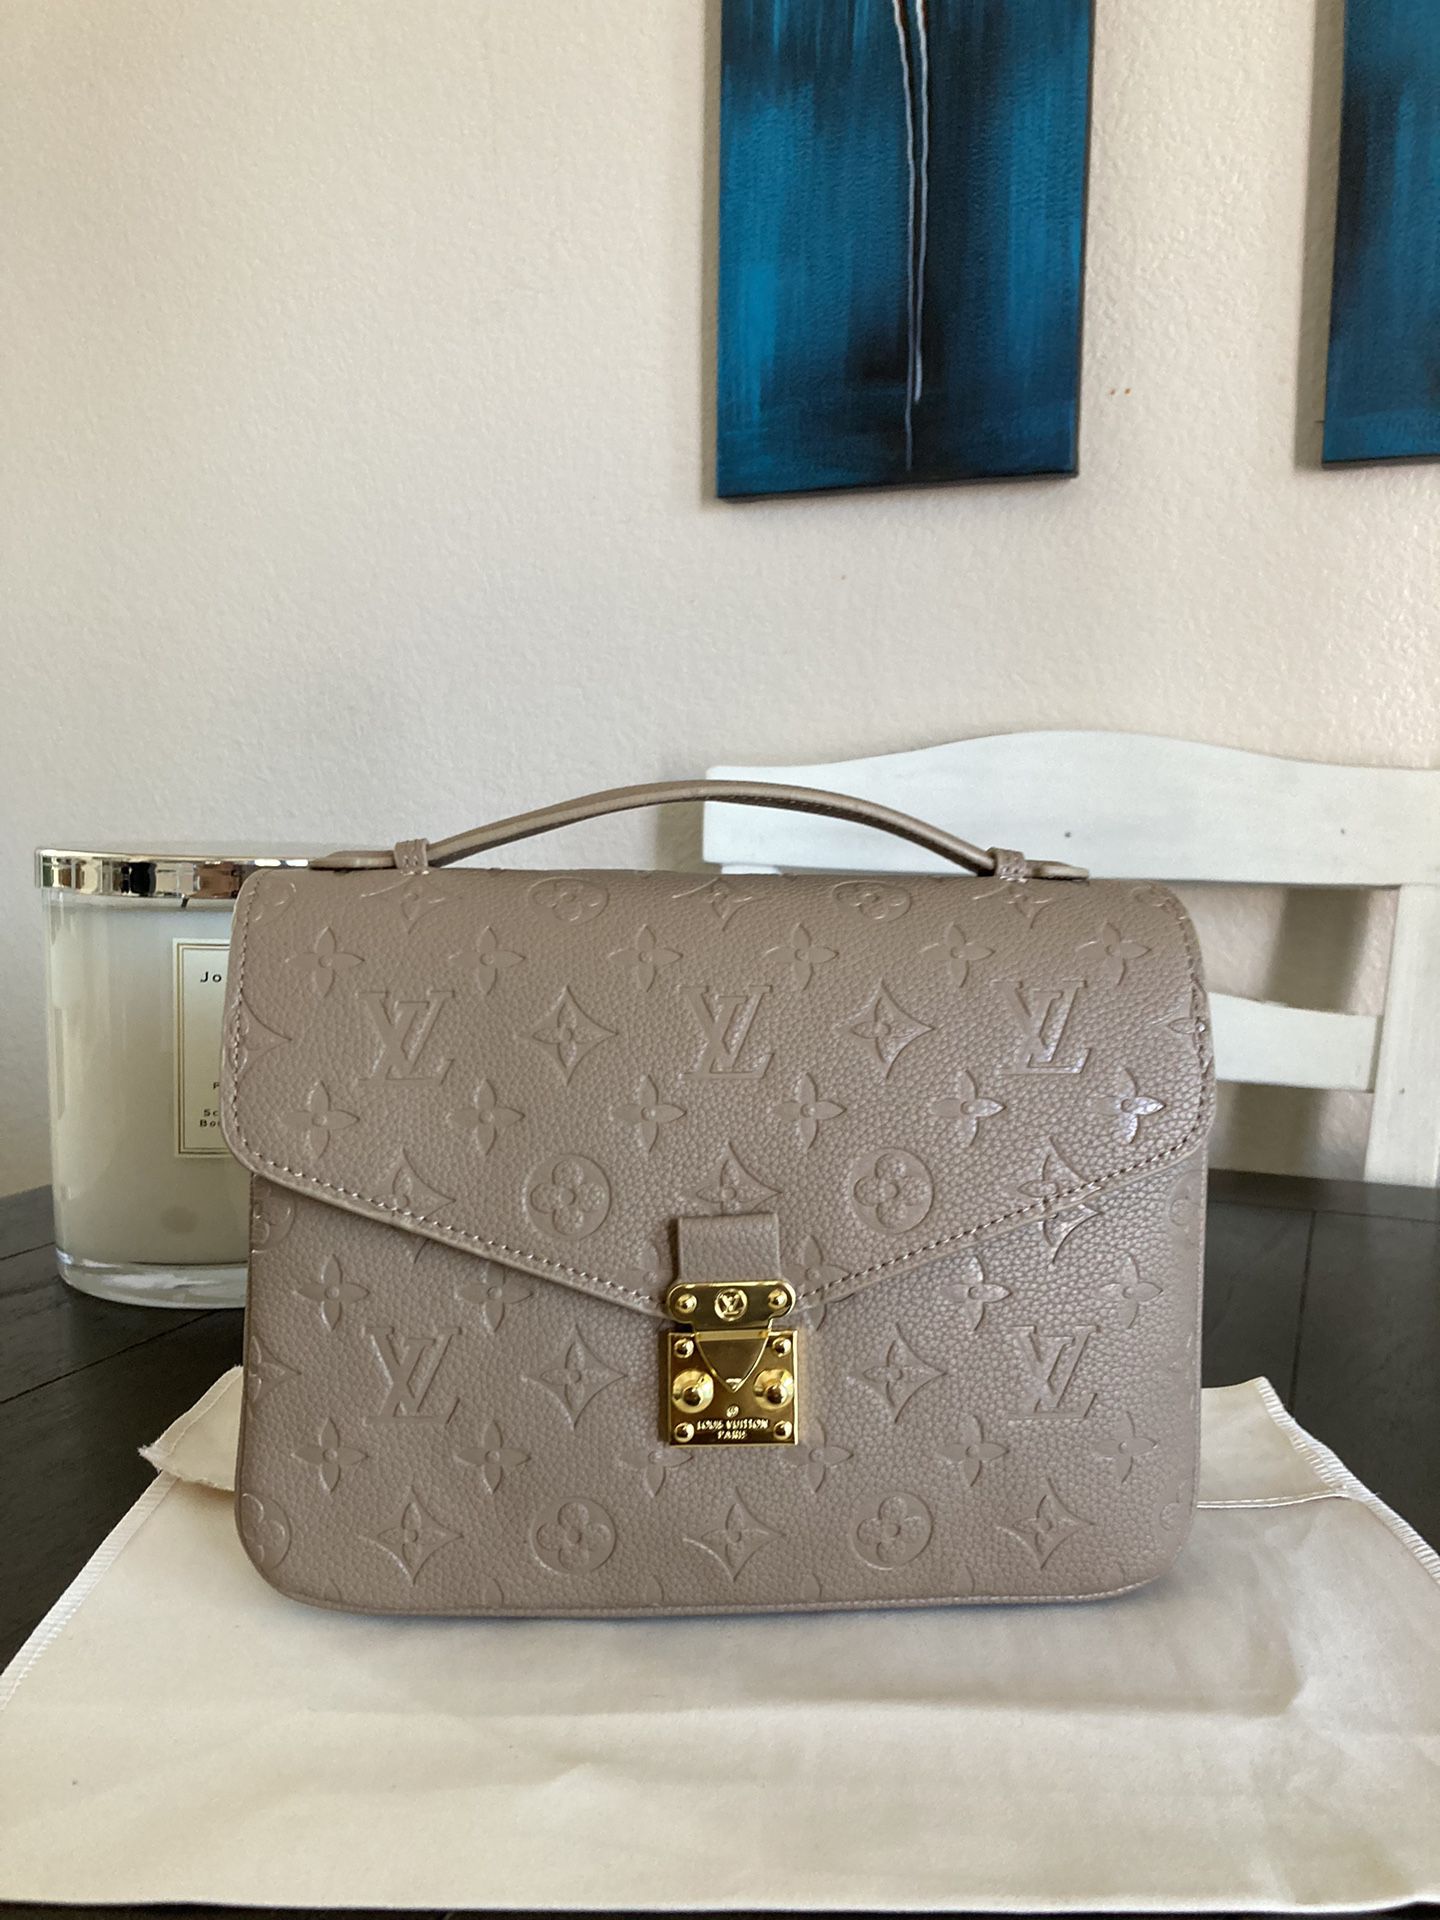 Louis Vuitton Messenger Bag for Sale in Las Vegas, NV - OfferUp